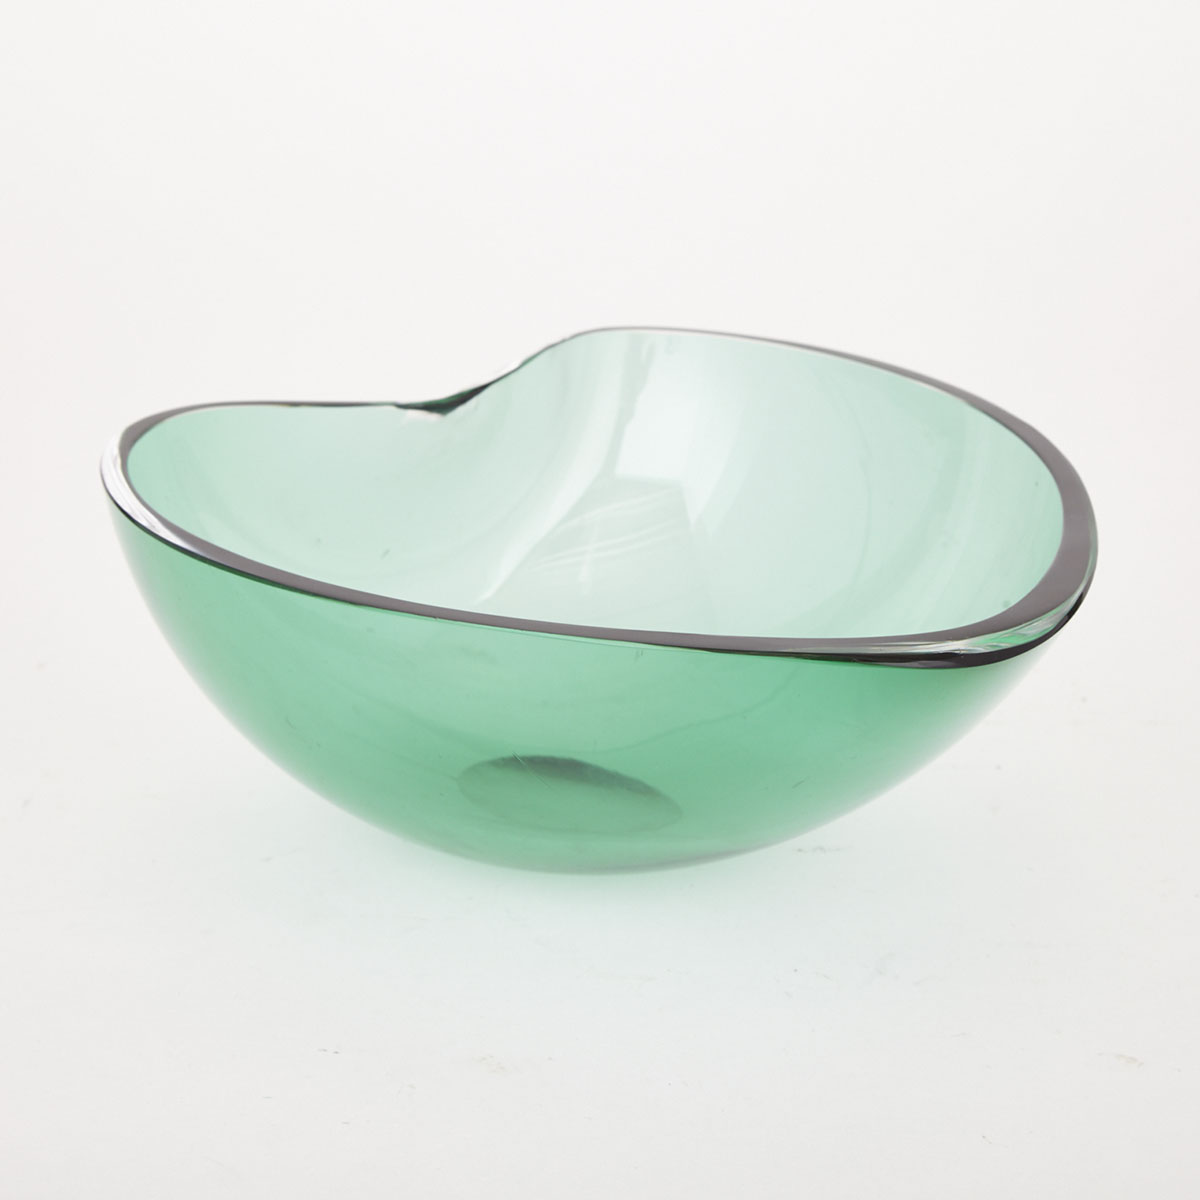 Orrefors Green Glass Leaf Shaped Bowl, Edward Hald, 20th century